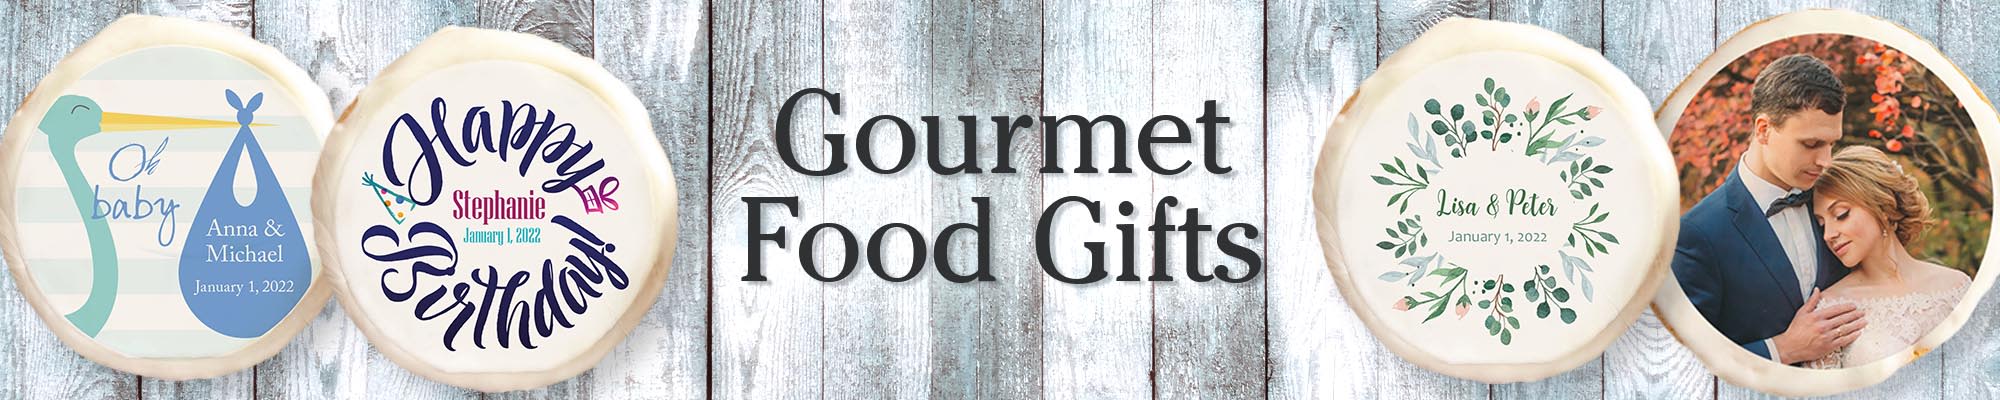 Gourmet Food Gifts